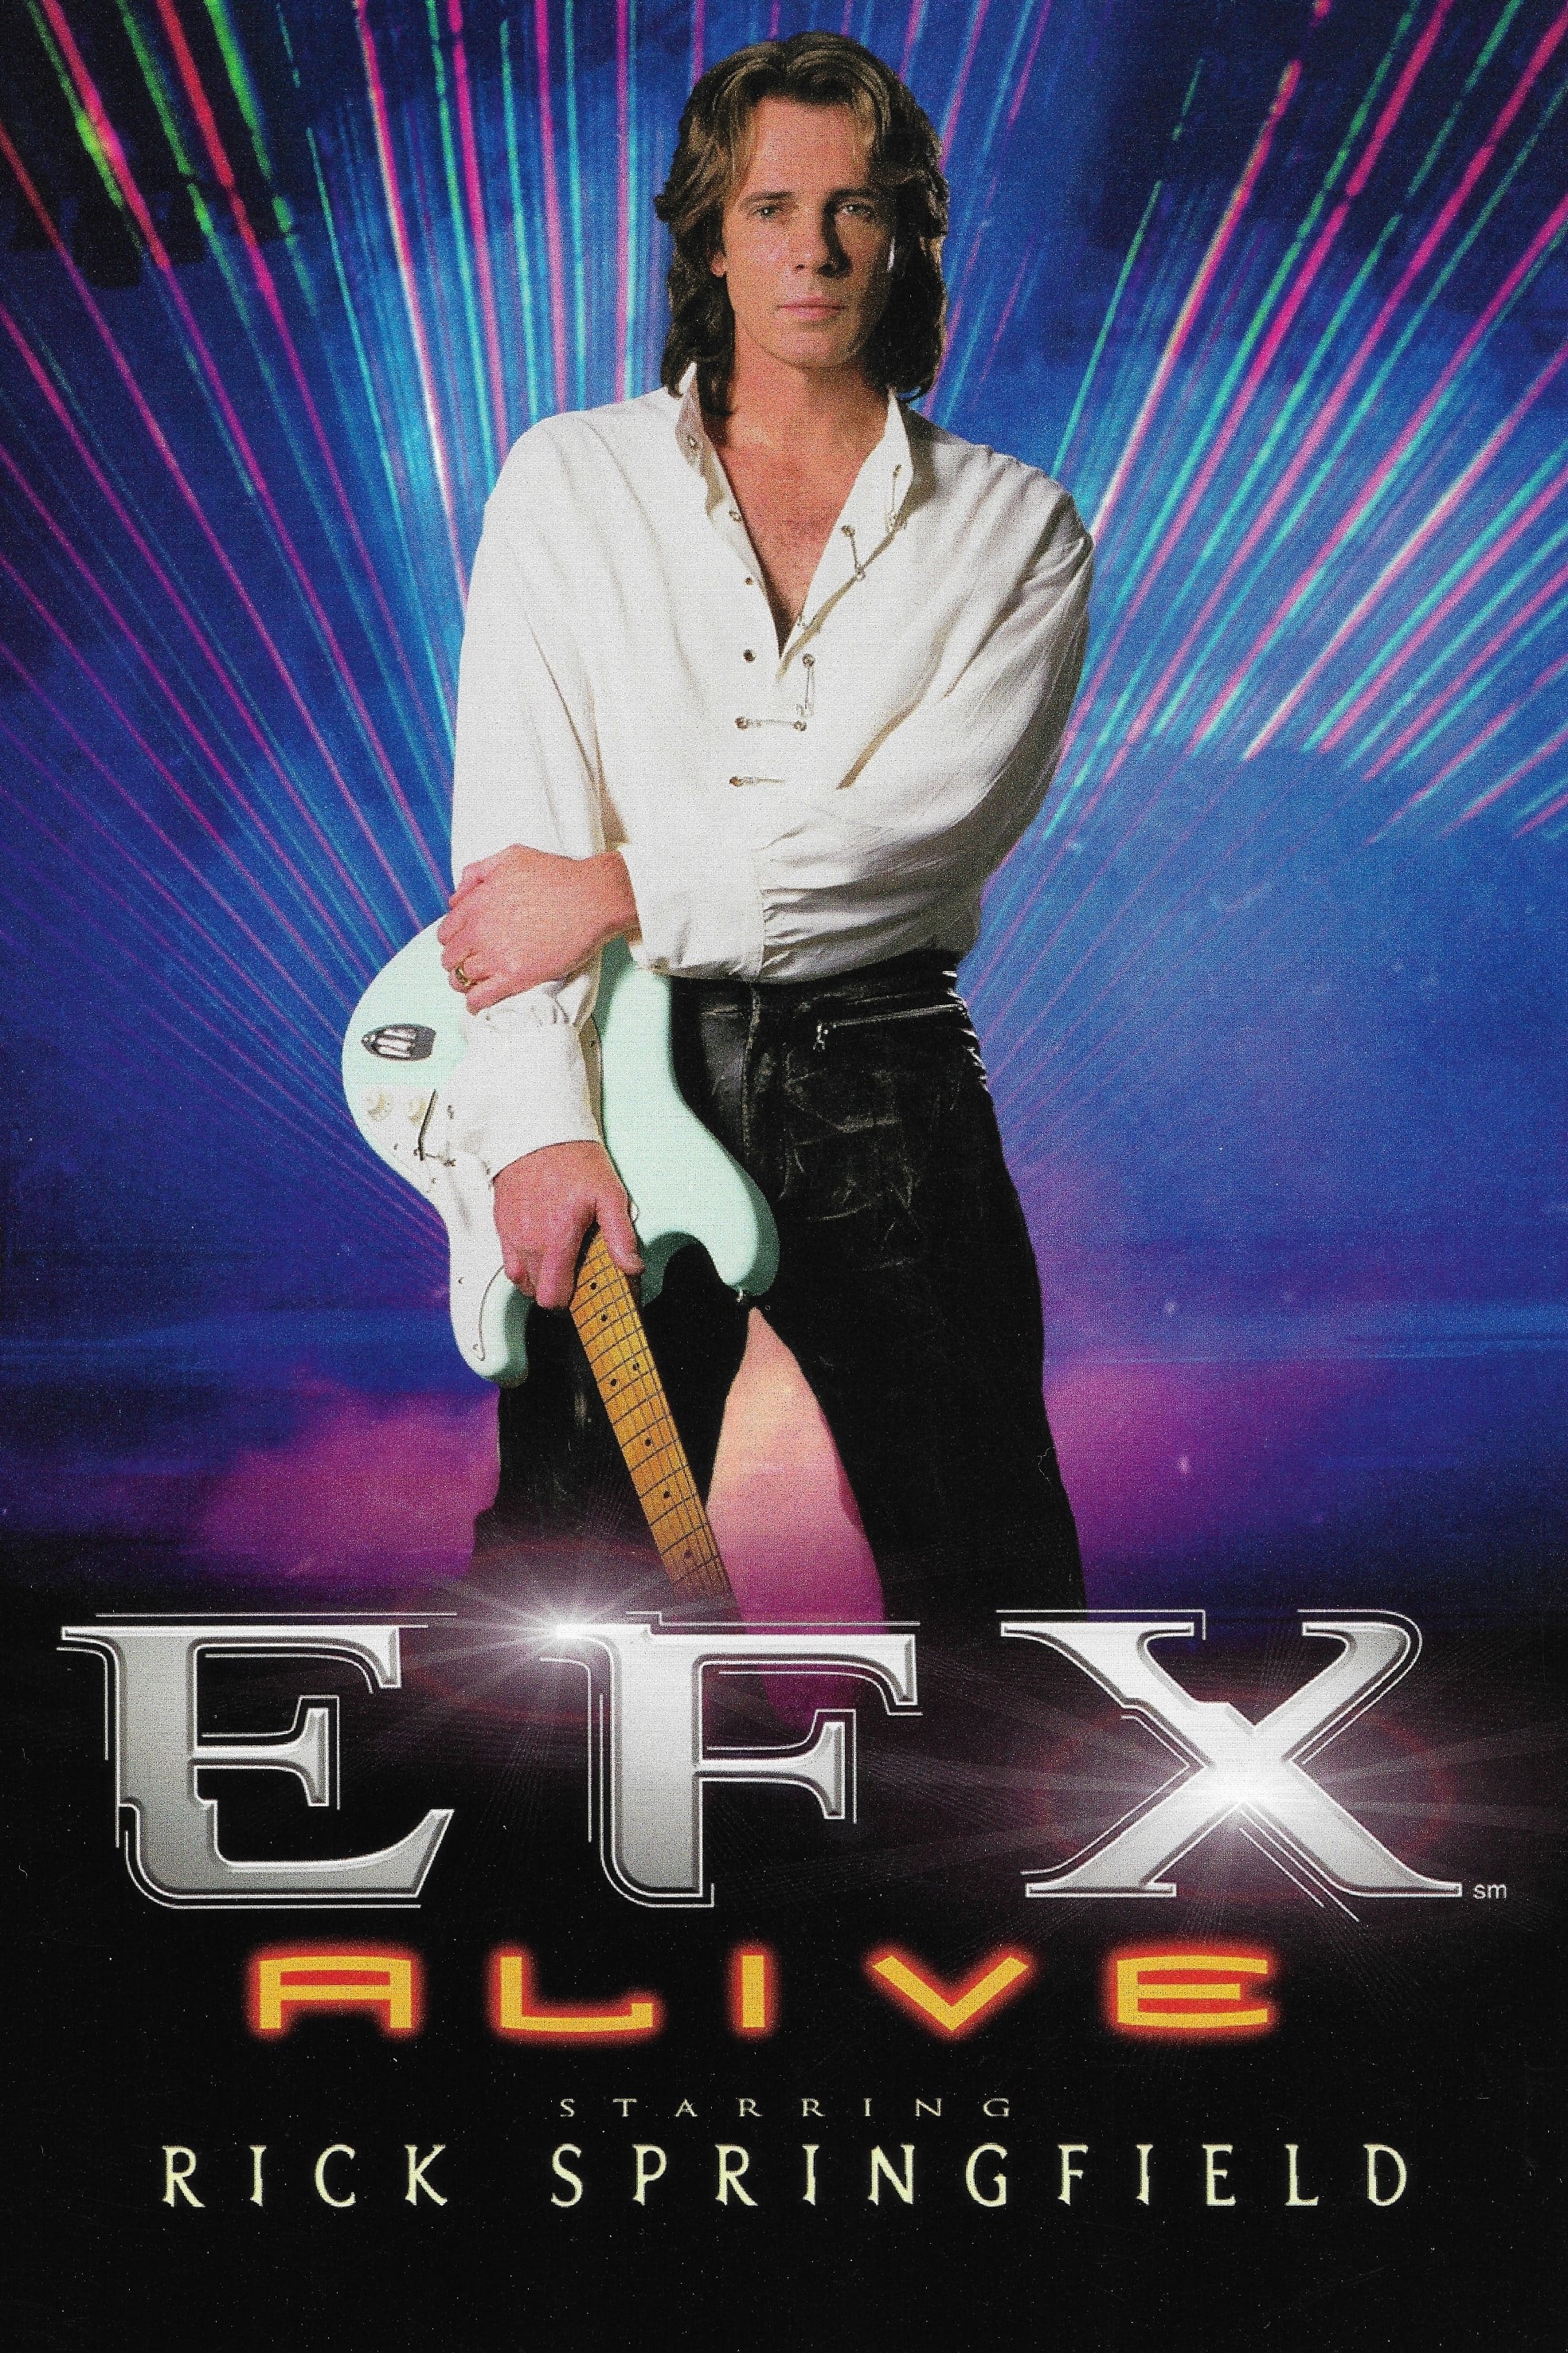 EFX Alive starring Rick Springfield